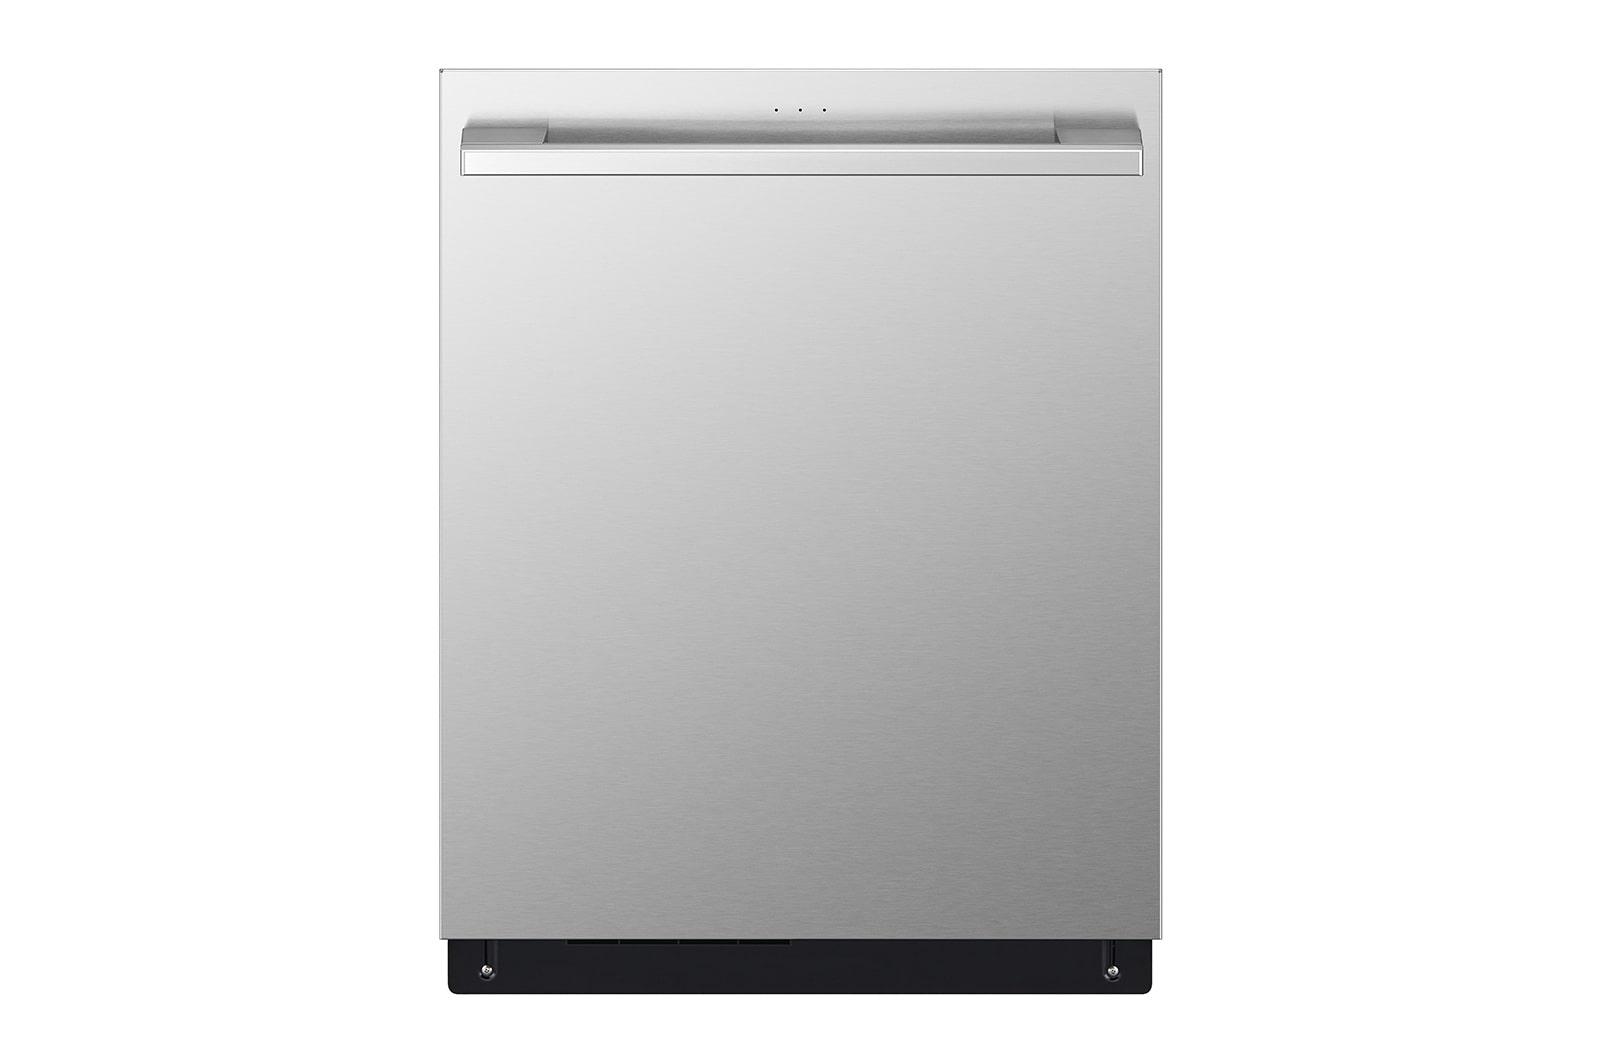 LG STUDIO Top Control Smart Dishwasher with QuadWash™ and TrueSteam®